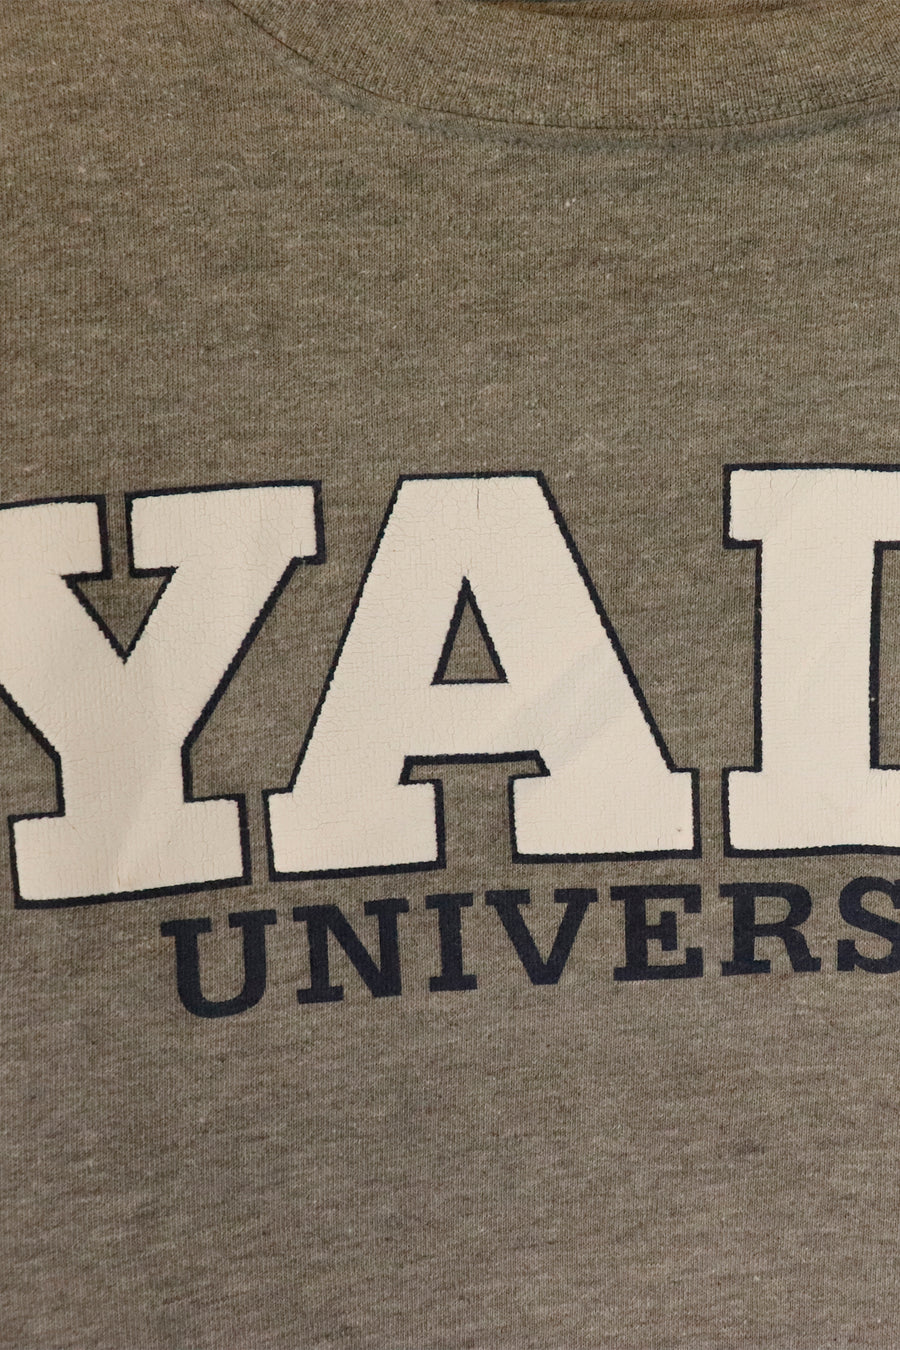 Vintage Yale University Block Lettering Vinyl Sweatshirt Sz S